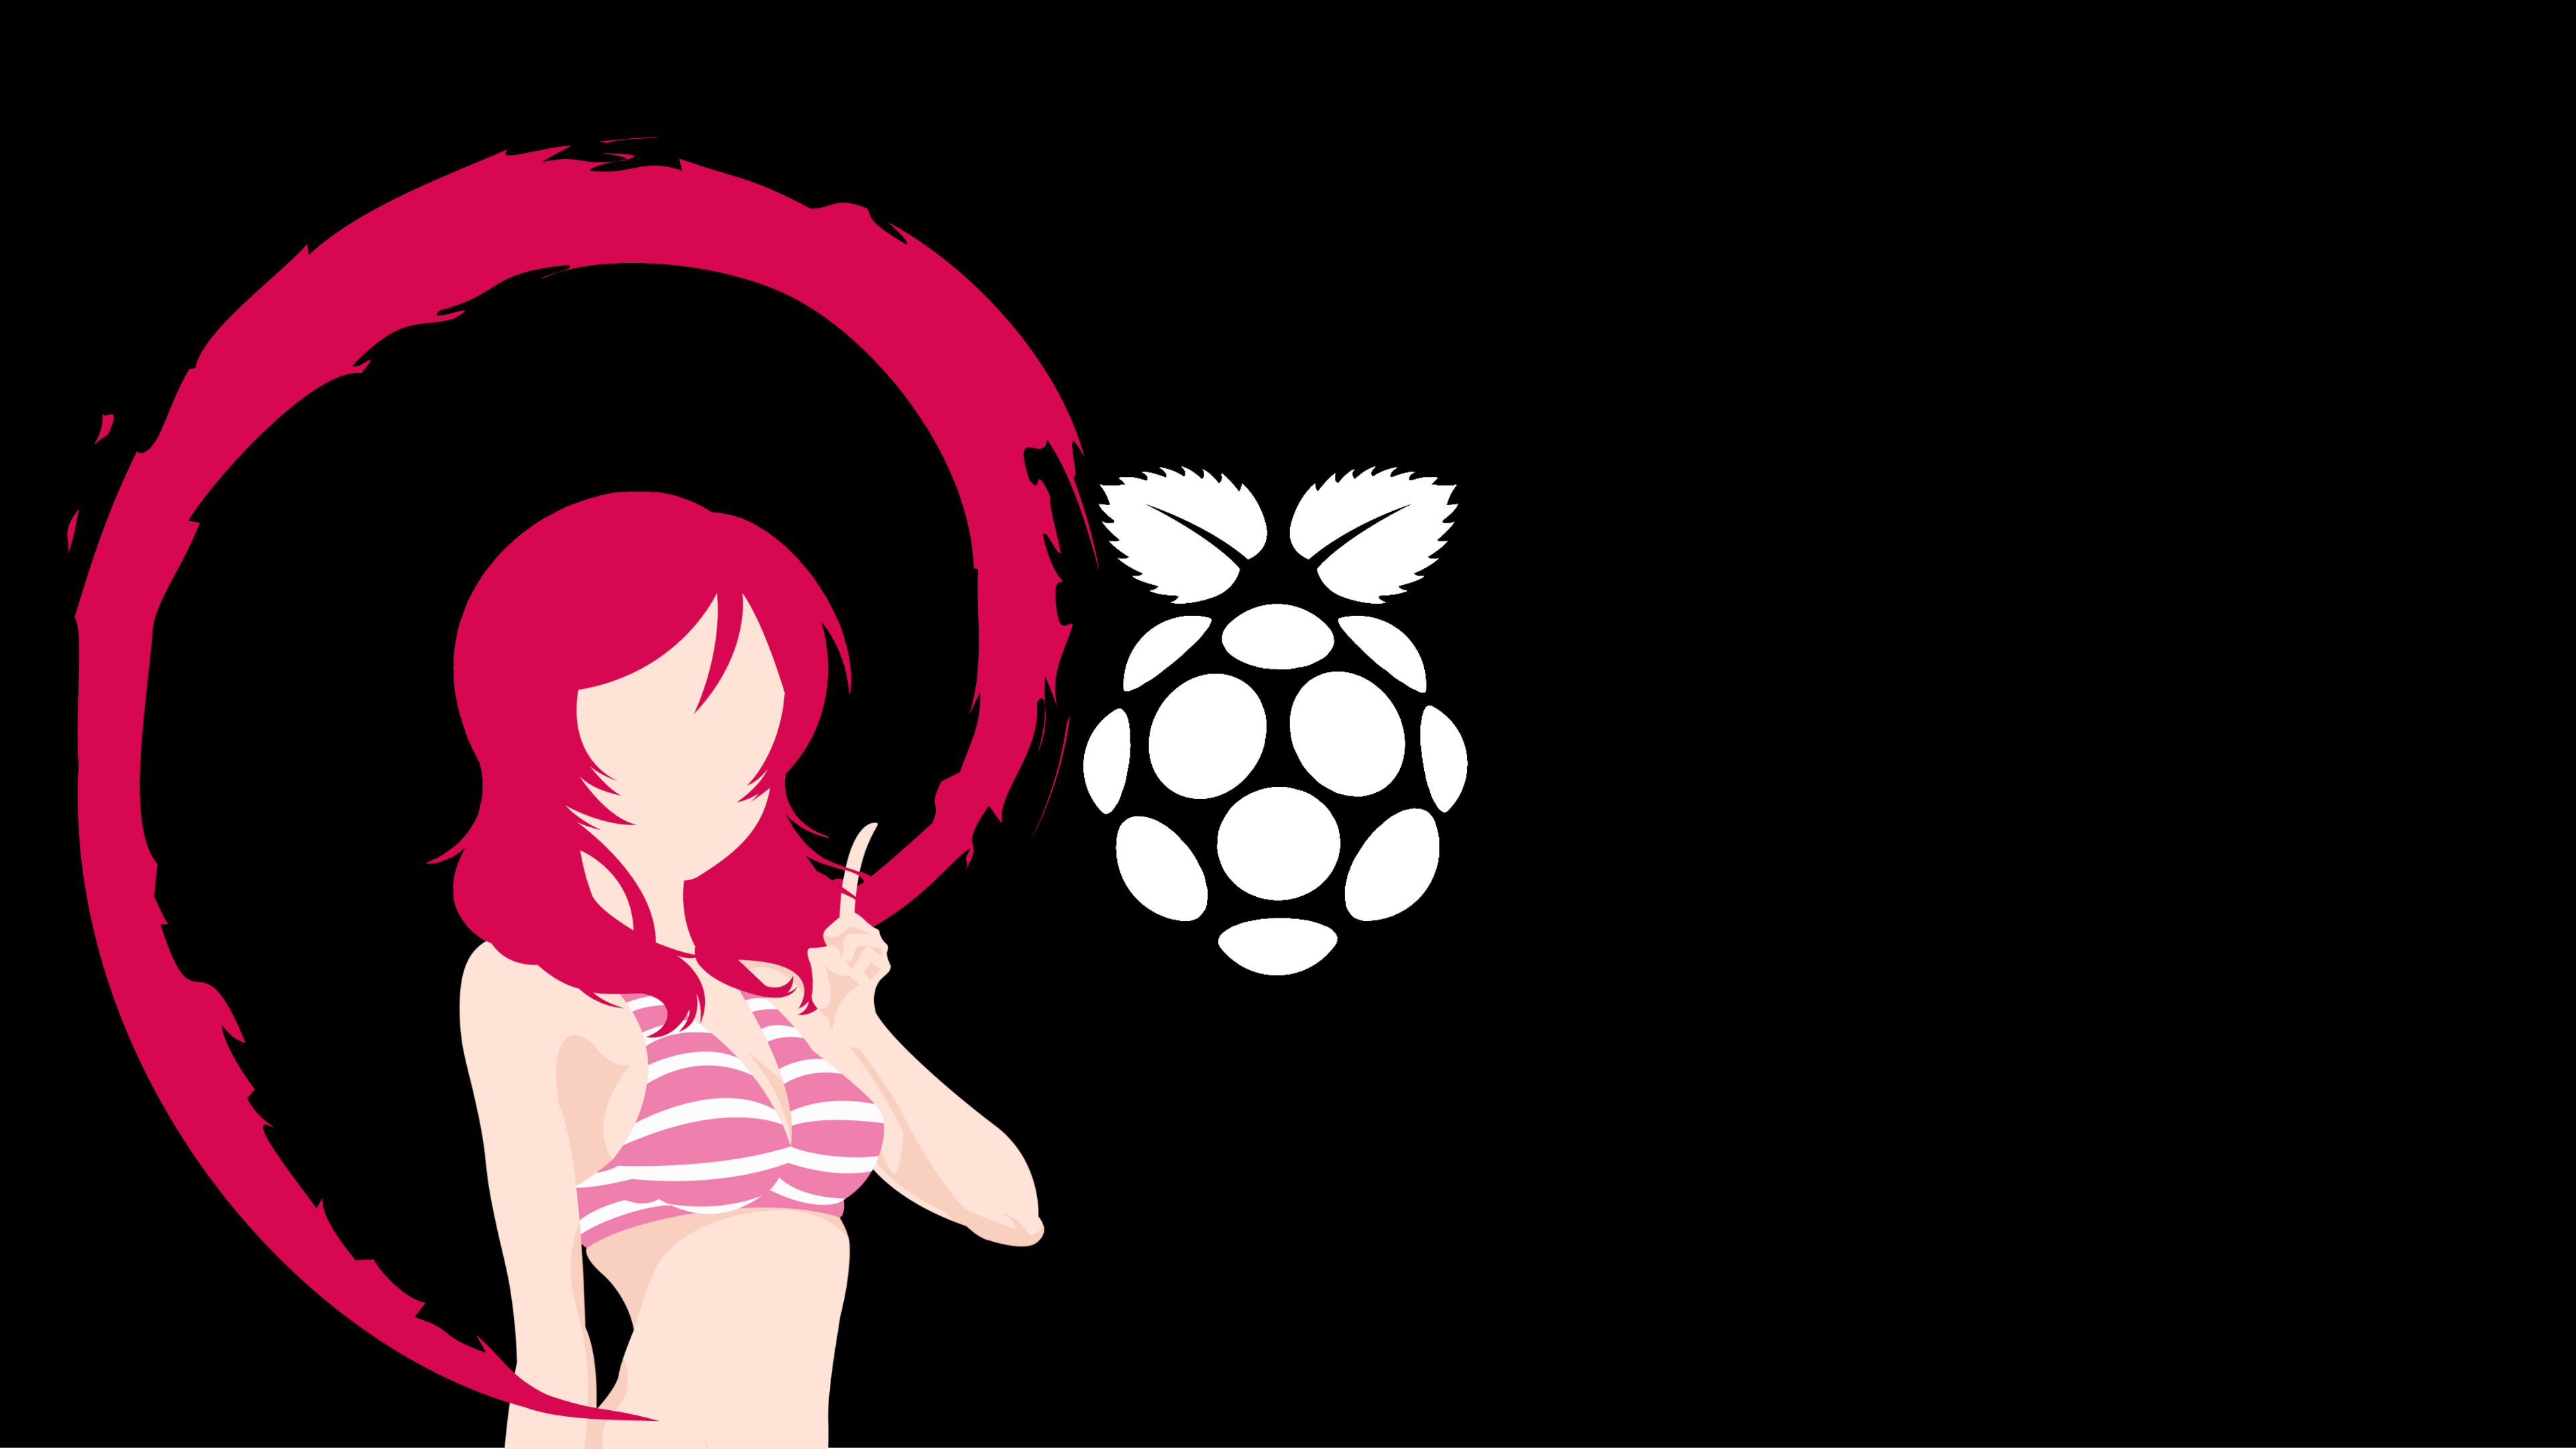 Raspbian Os Raspberry Pi Anime Wallpaper